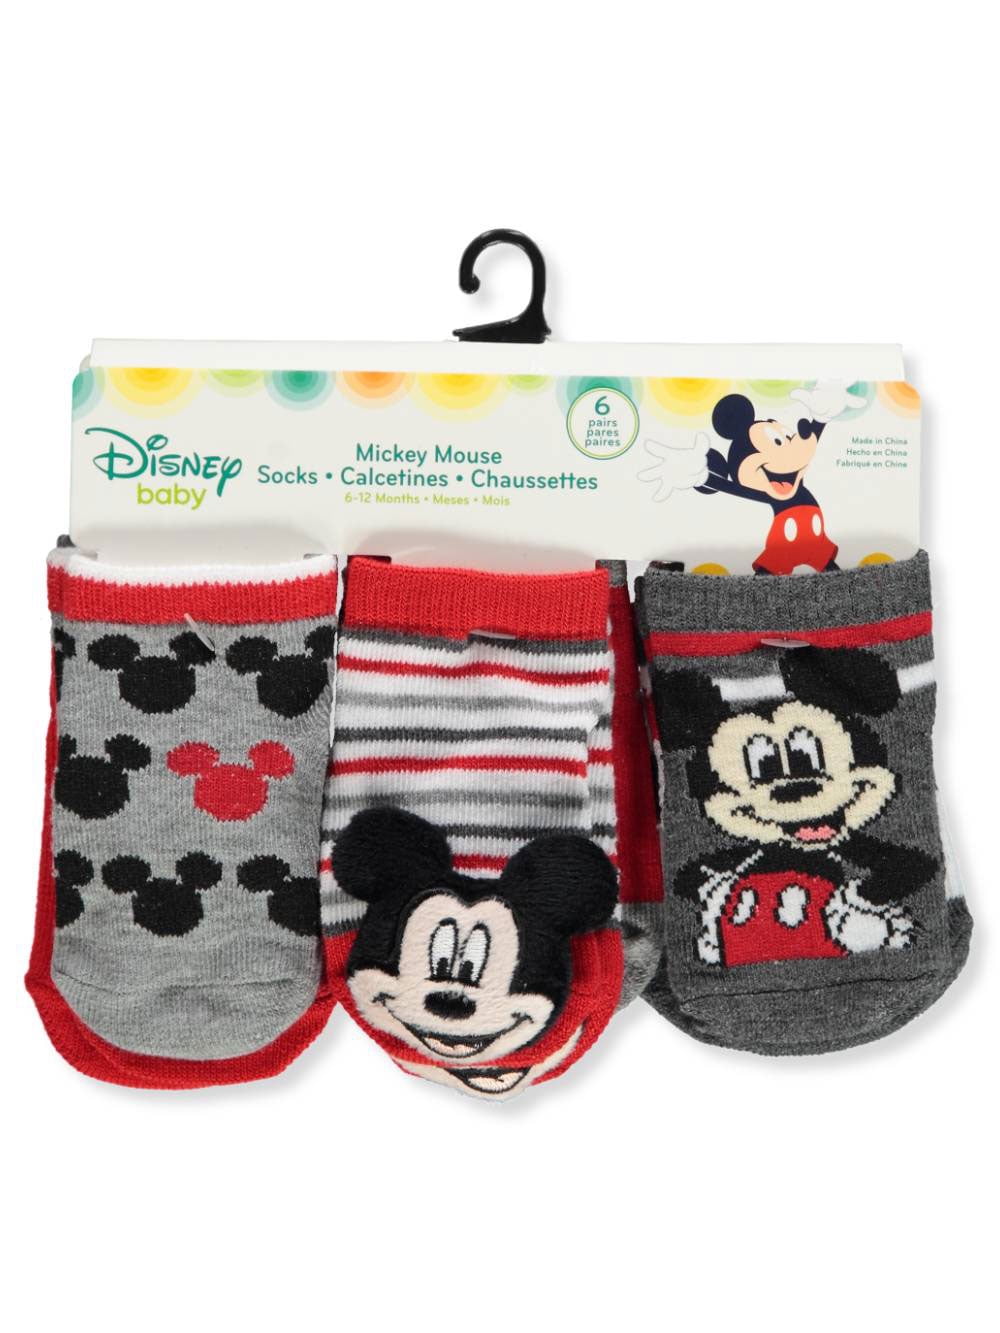 Disney Mickey Mouse Little Boys 6 pack Socks Toddler manufacturer